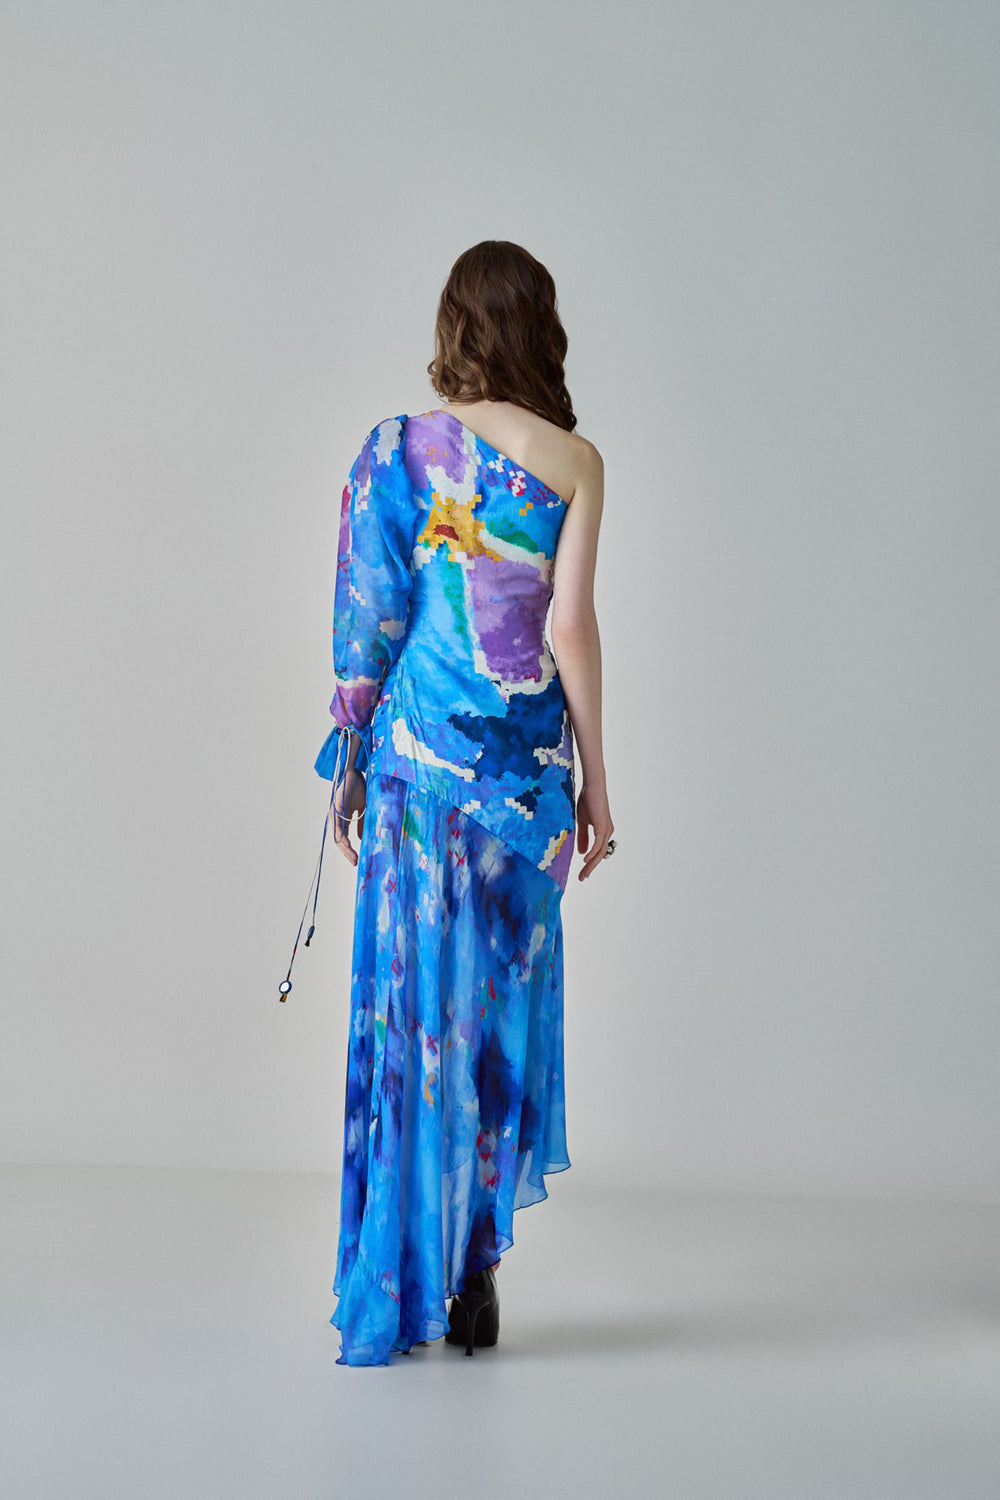 Alison Ikat Print  Dress